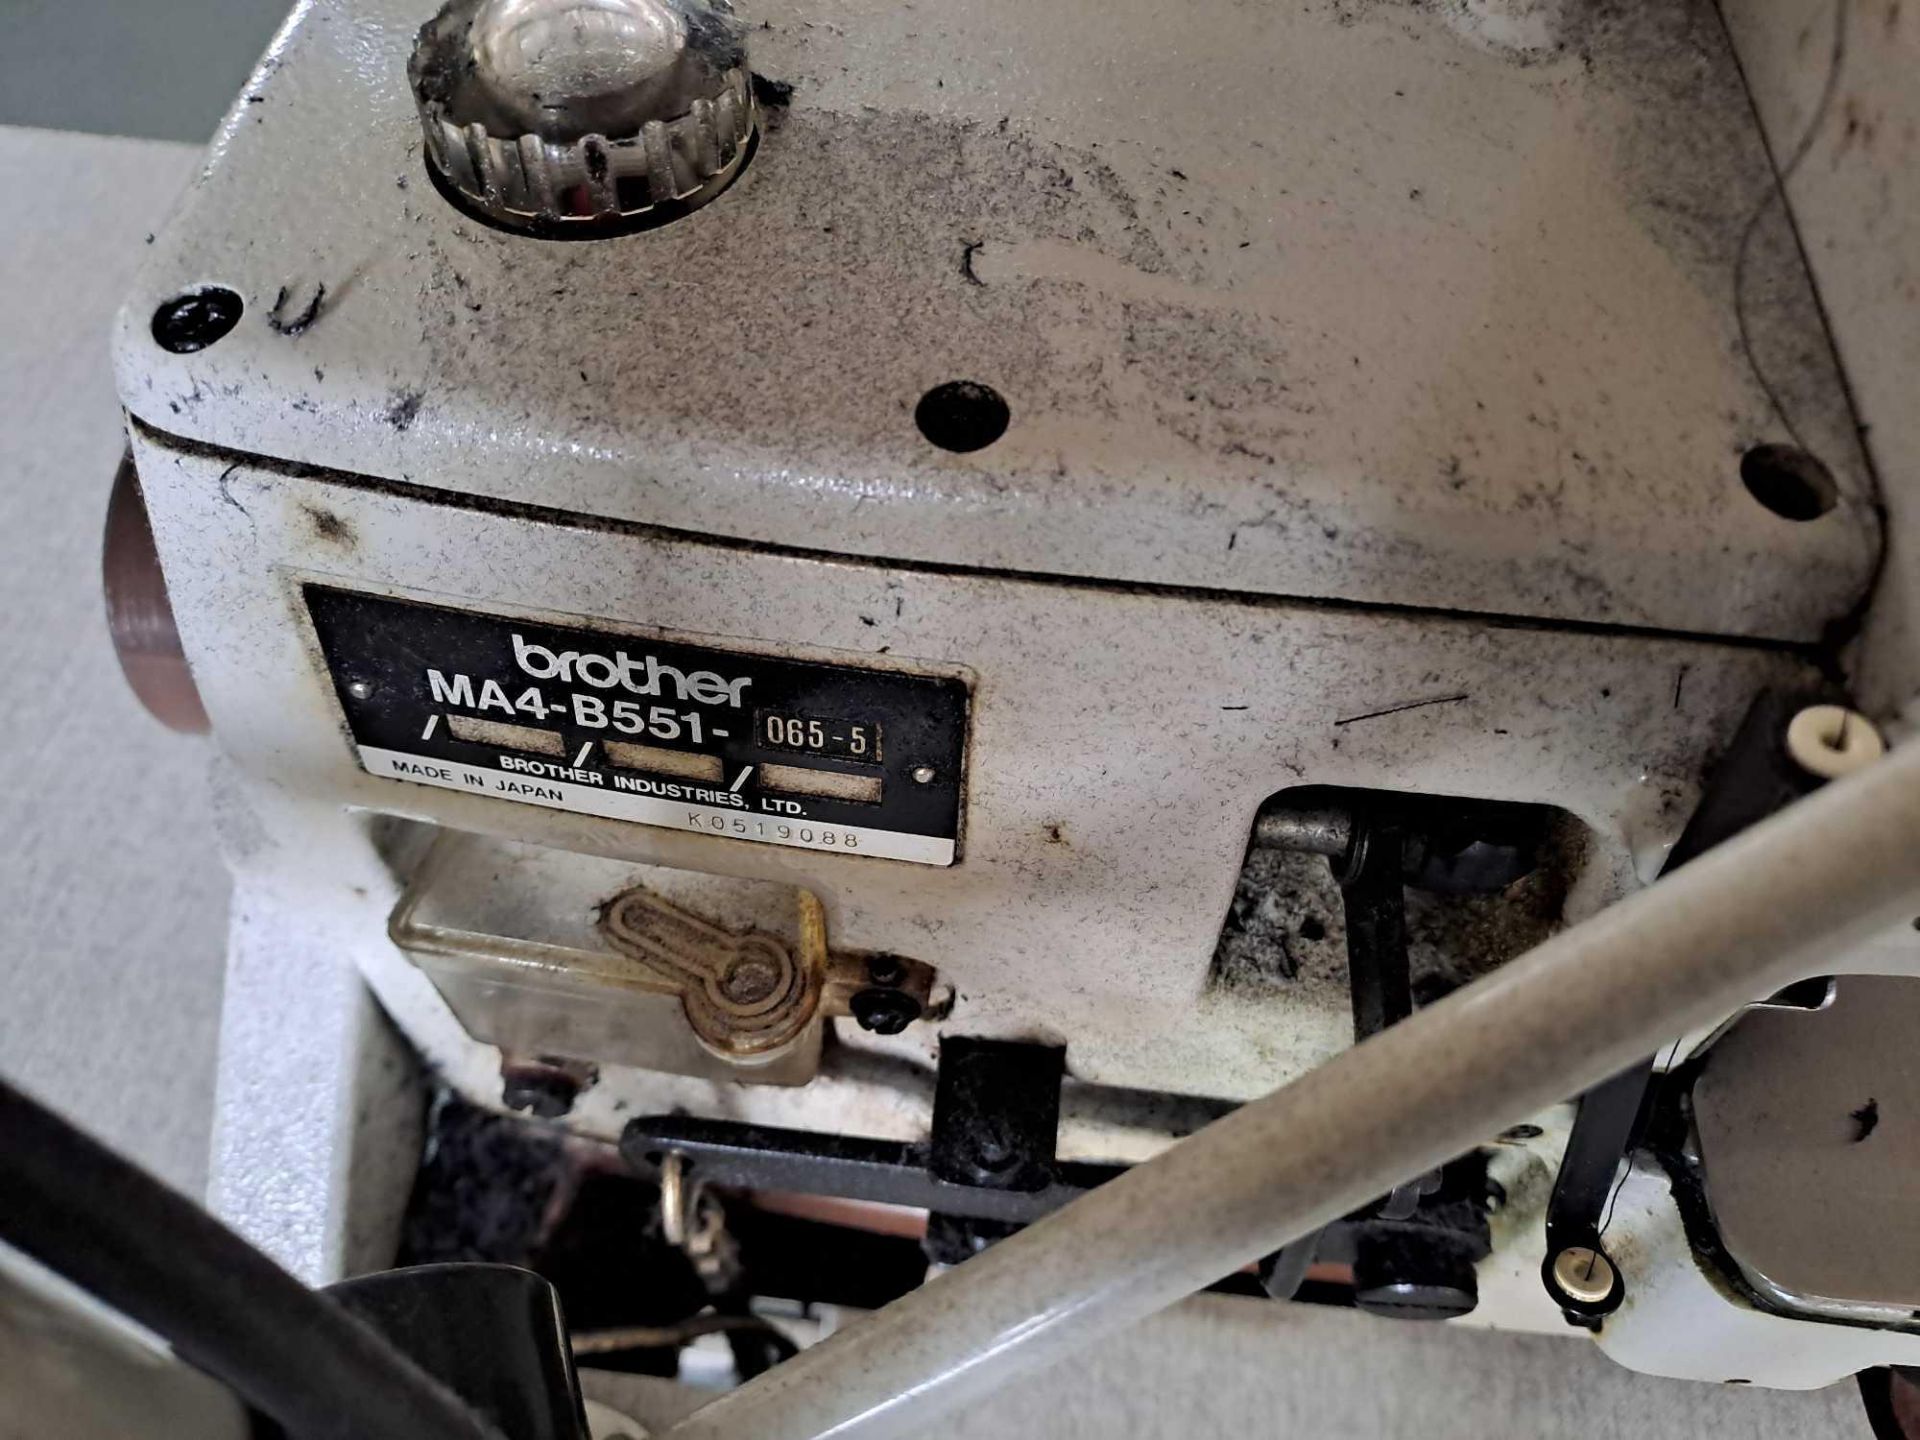 Brother P551701 Overlocker Sewing Machine - Image 3 of 6